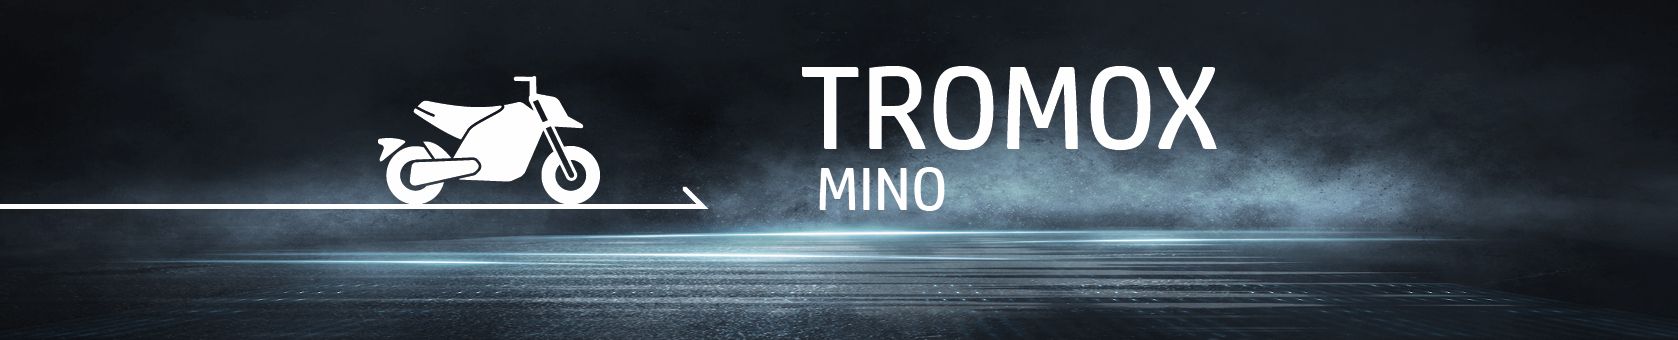 TROMOX Mino